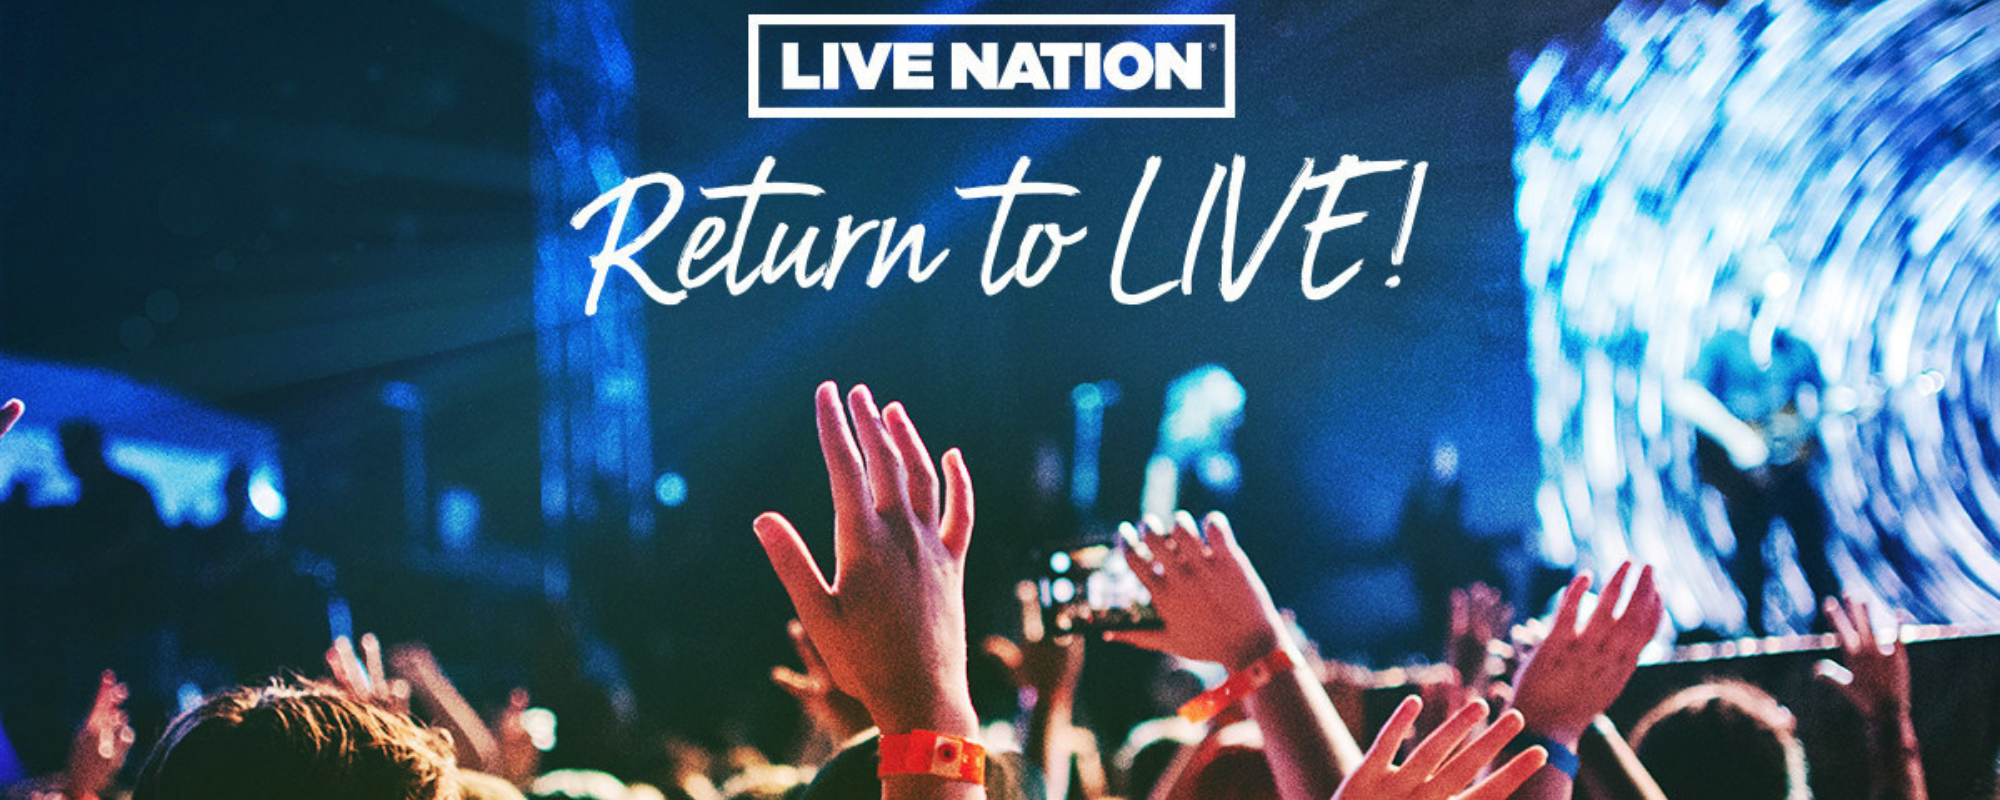 Live Nation Celebrates Return of Live Music with $20 ‘All-In’ Ticket Offer: Jason Aldean, Alanis Morissette, Lynyrd Skynyrd & More